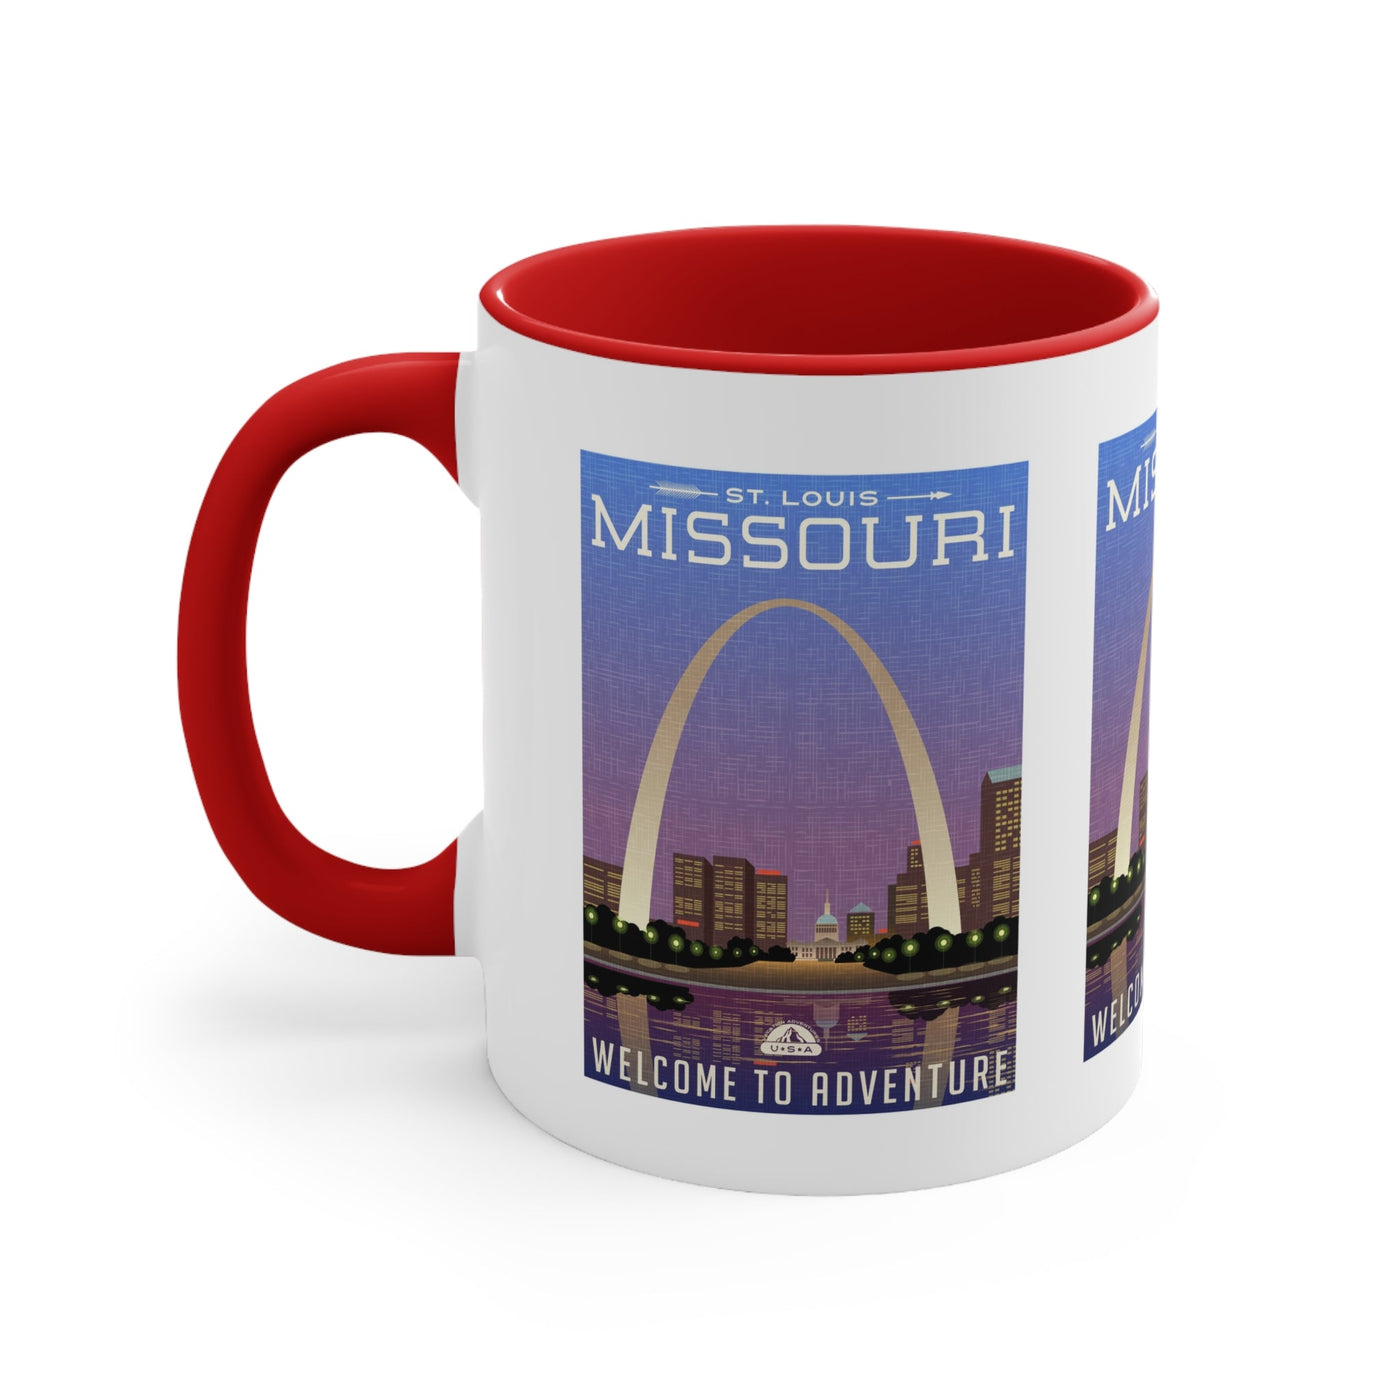 Missouri Coffee Mug - Ezra's Clothing